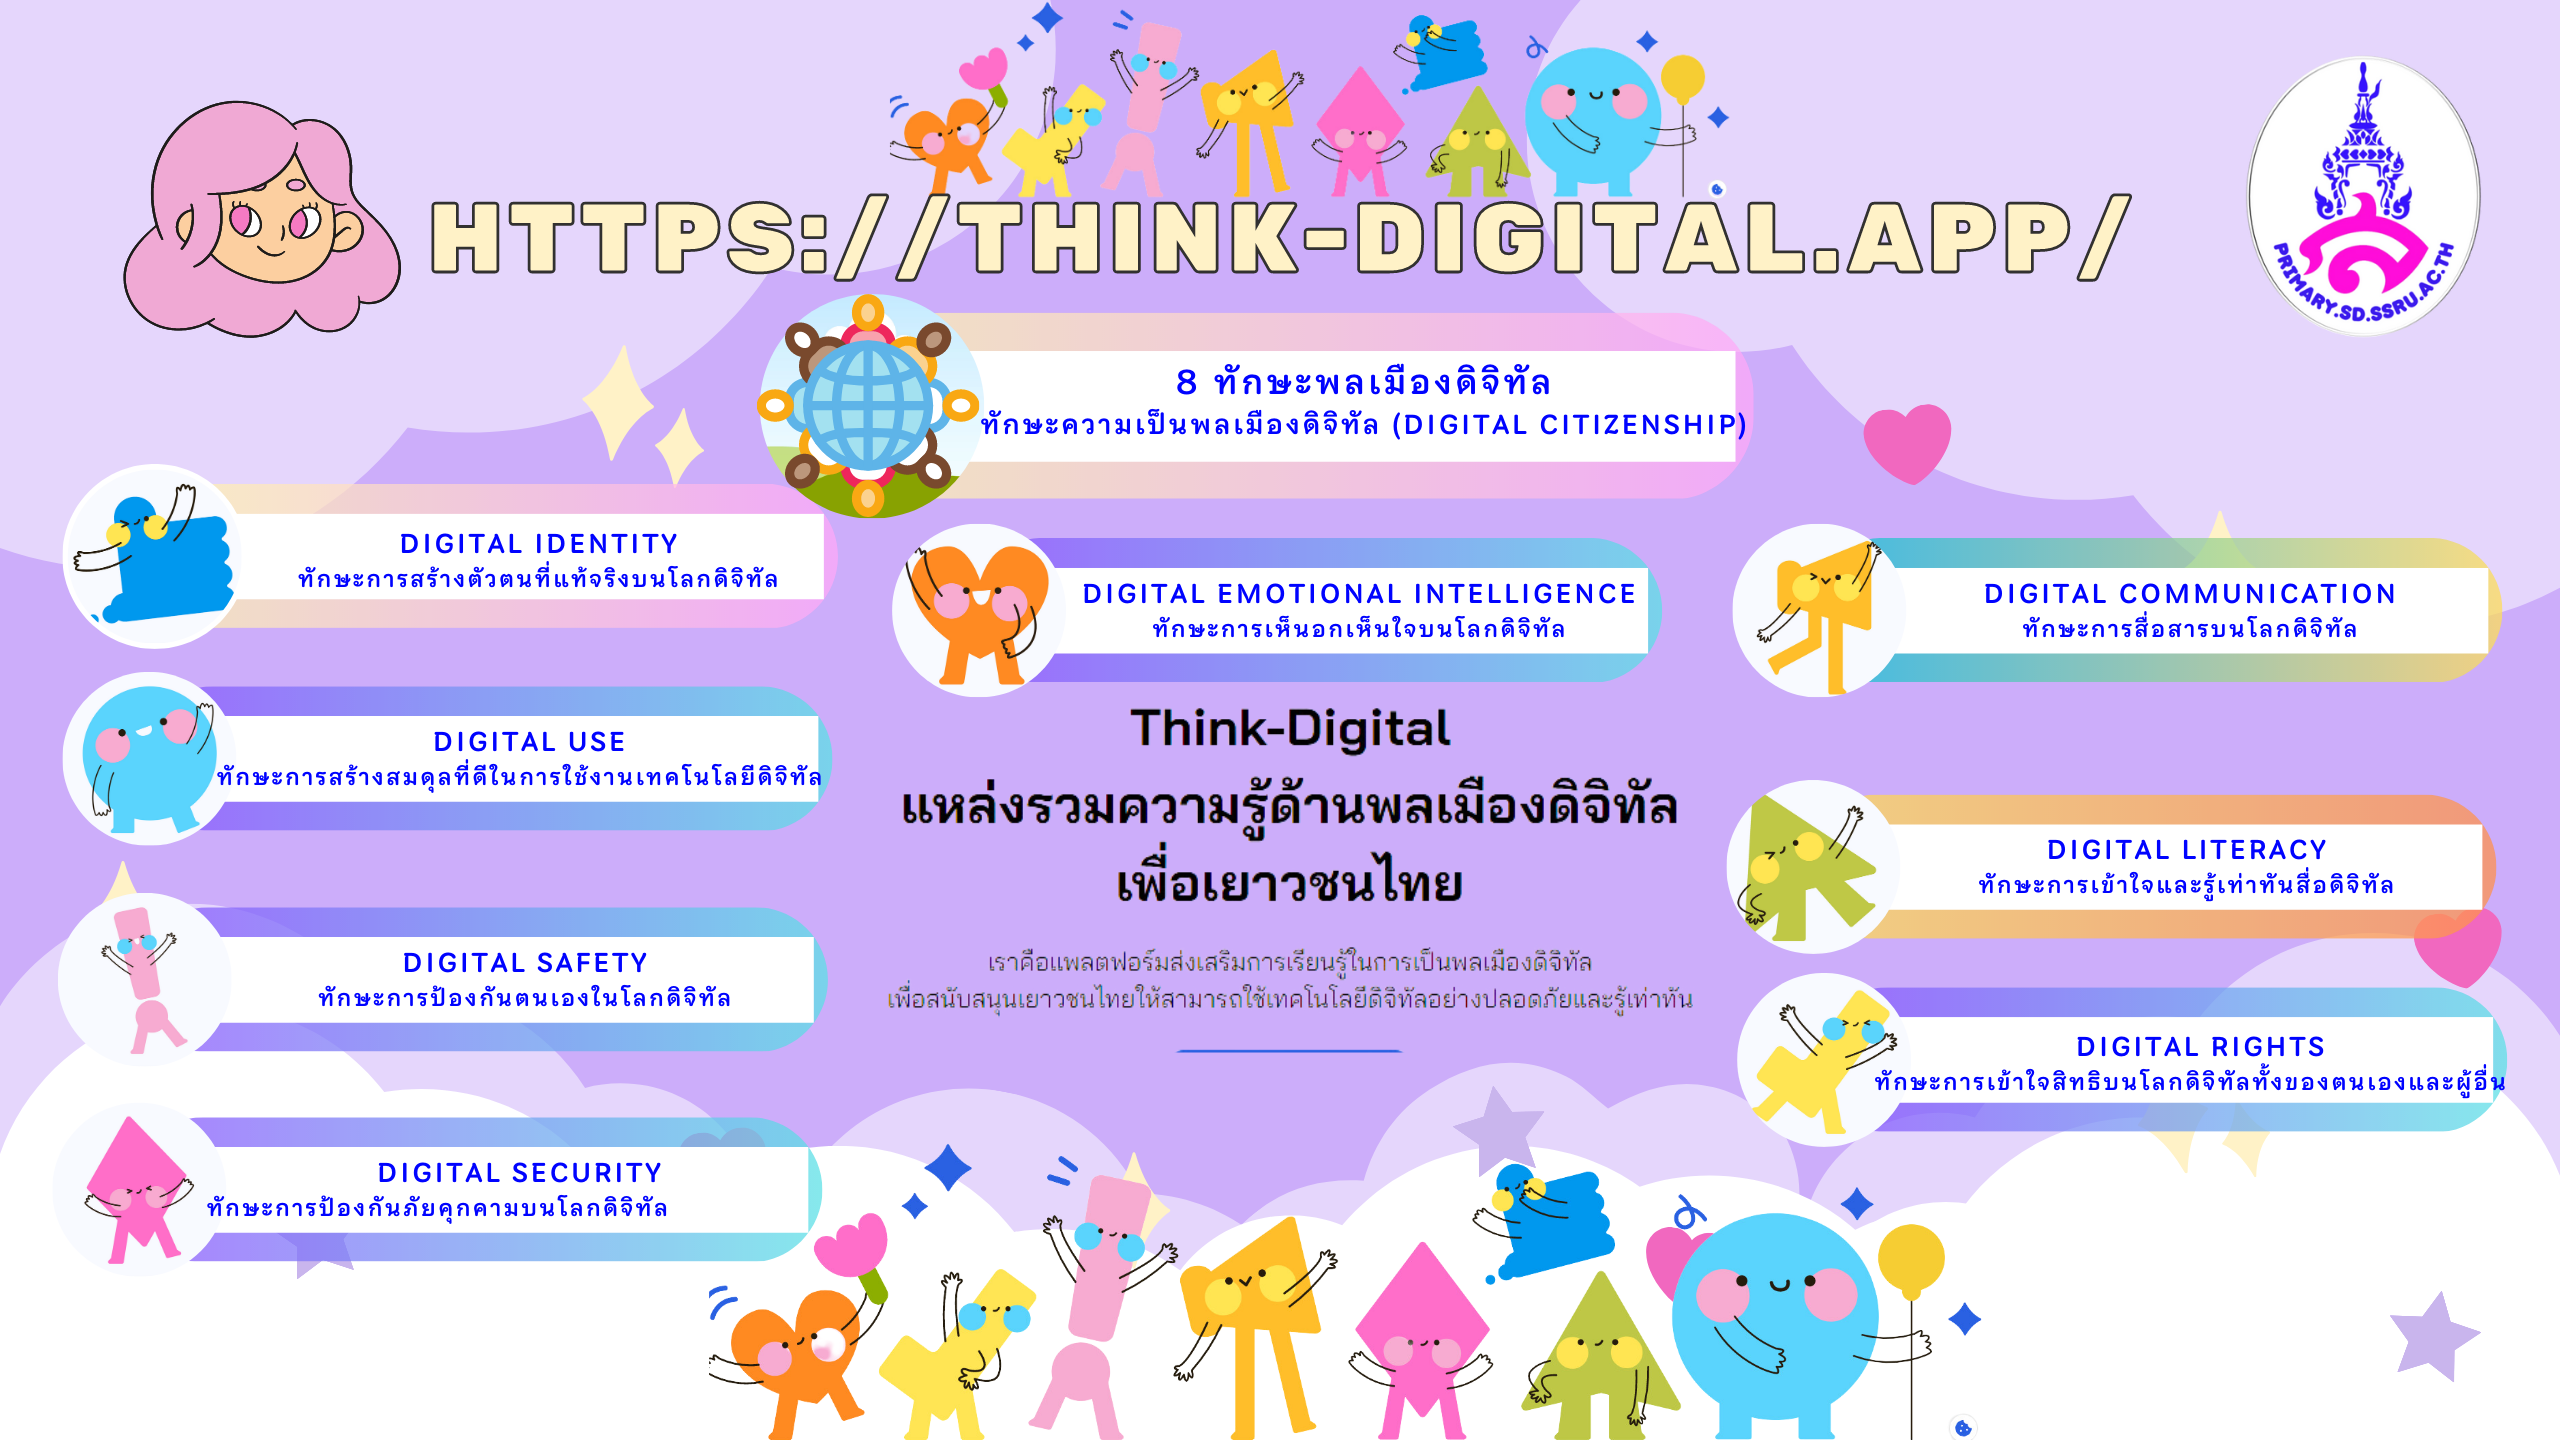 Think-Digital แหล่งรวมความรู้ด้านพลเมืองดิจิทัล